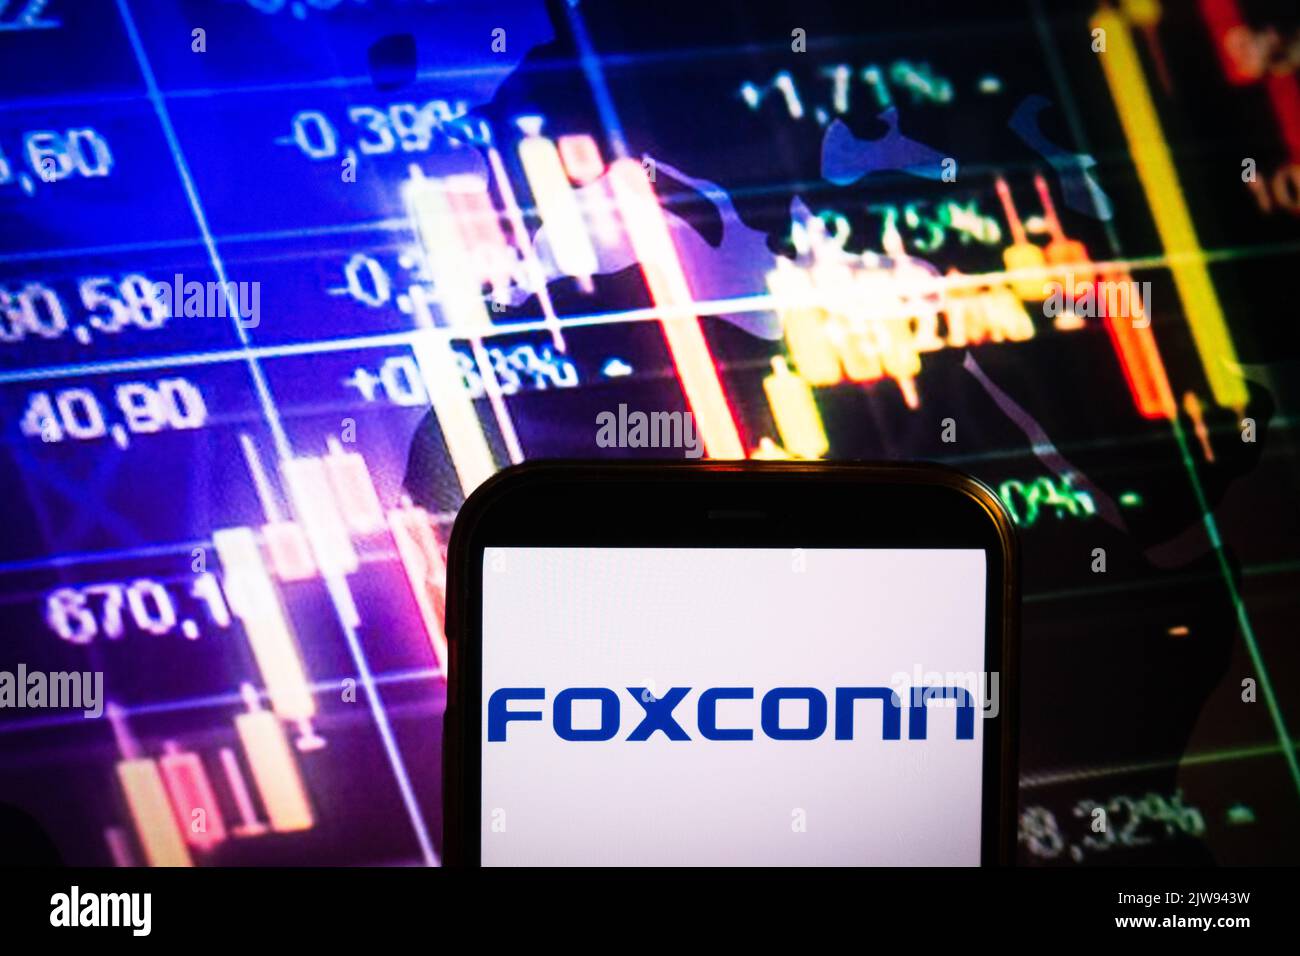 KONSKIE, POLAND - August 30, 2022: Smartphone displaying logo of Foxconn company on stock exchange diagram background Stock Photo